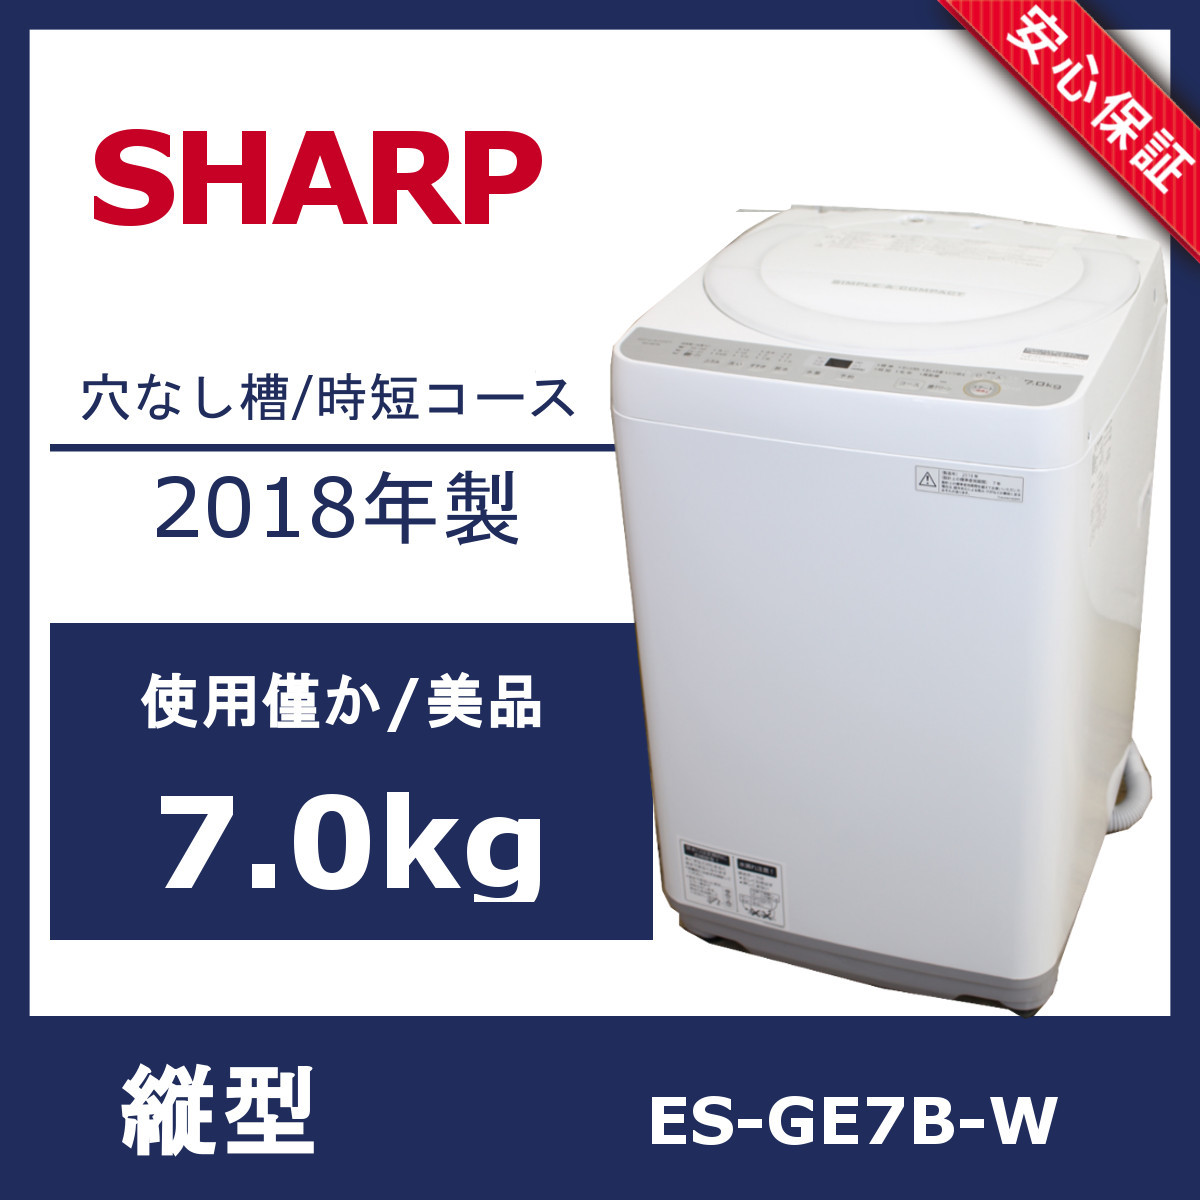 SHARP 7.0kg 全自動洗濯機 ES-GE7B-W - 川崎市・横浜市で家具・家電の ...